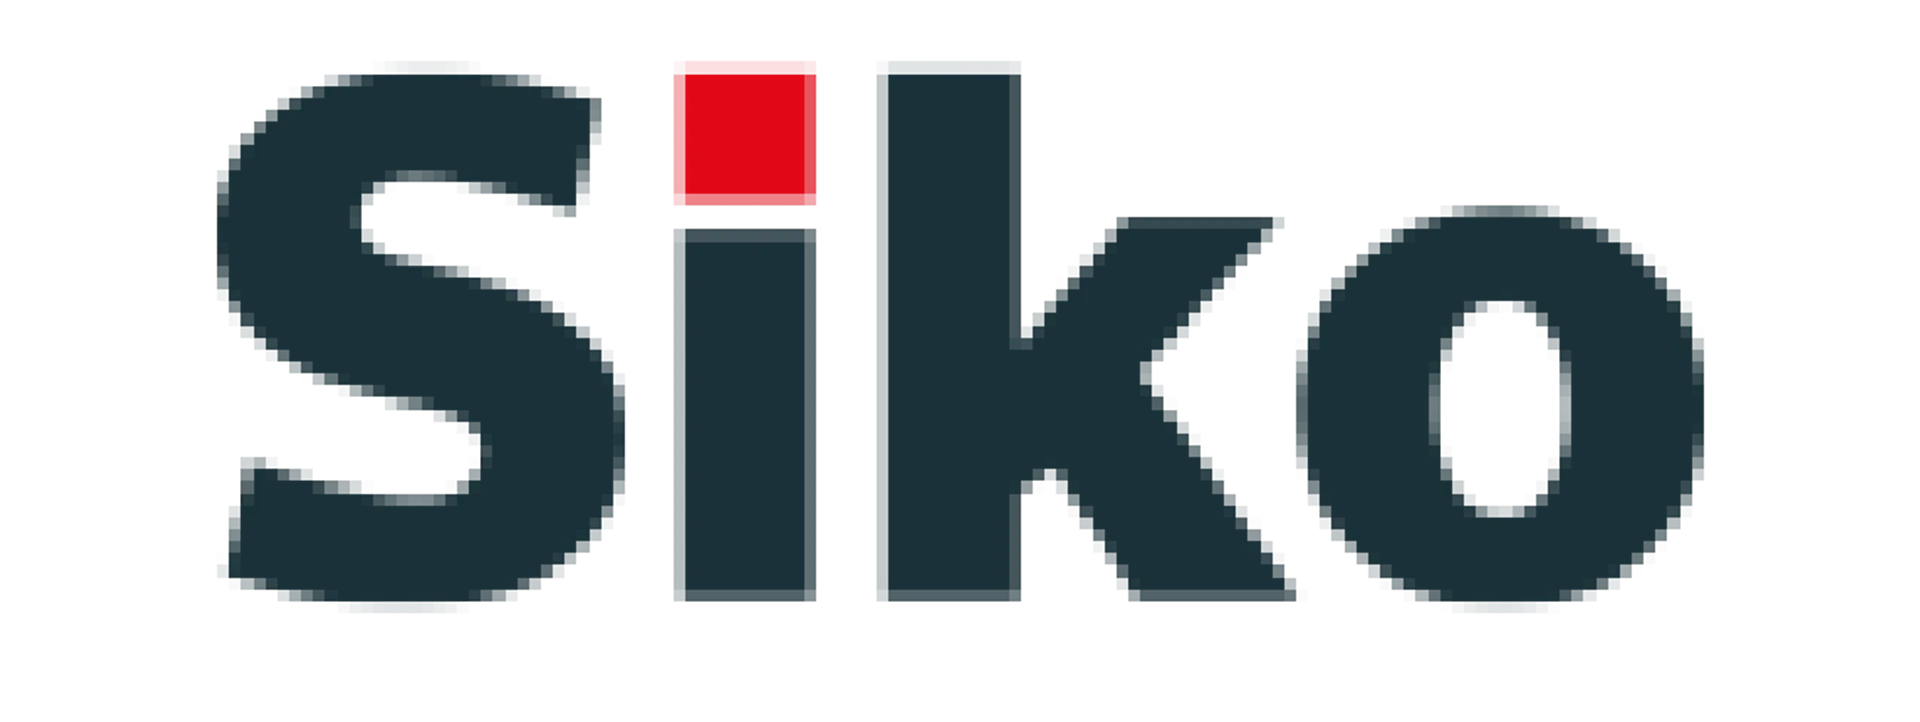 SIKO logo